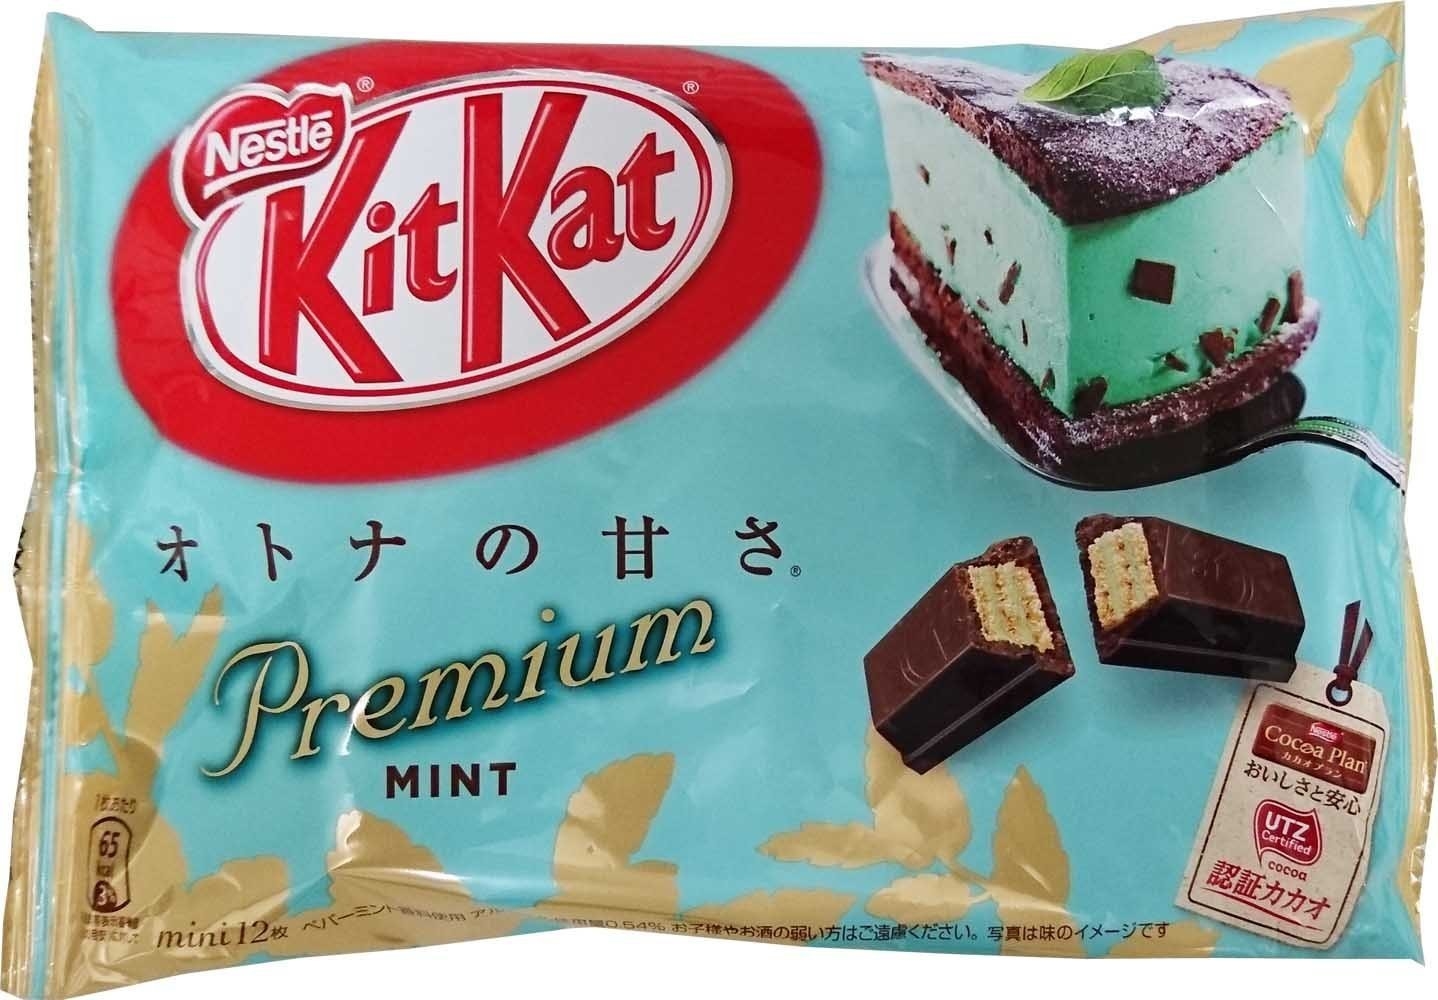 of premium mint-flavored Kit Kats (for good measure). 